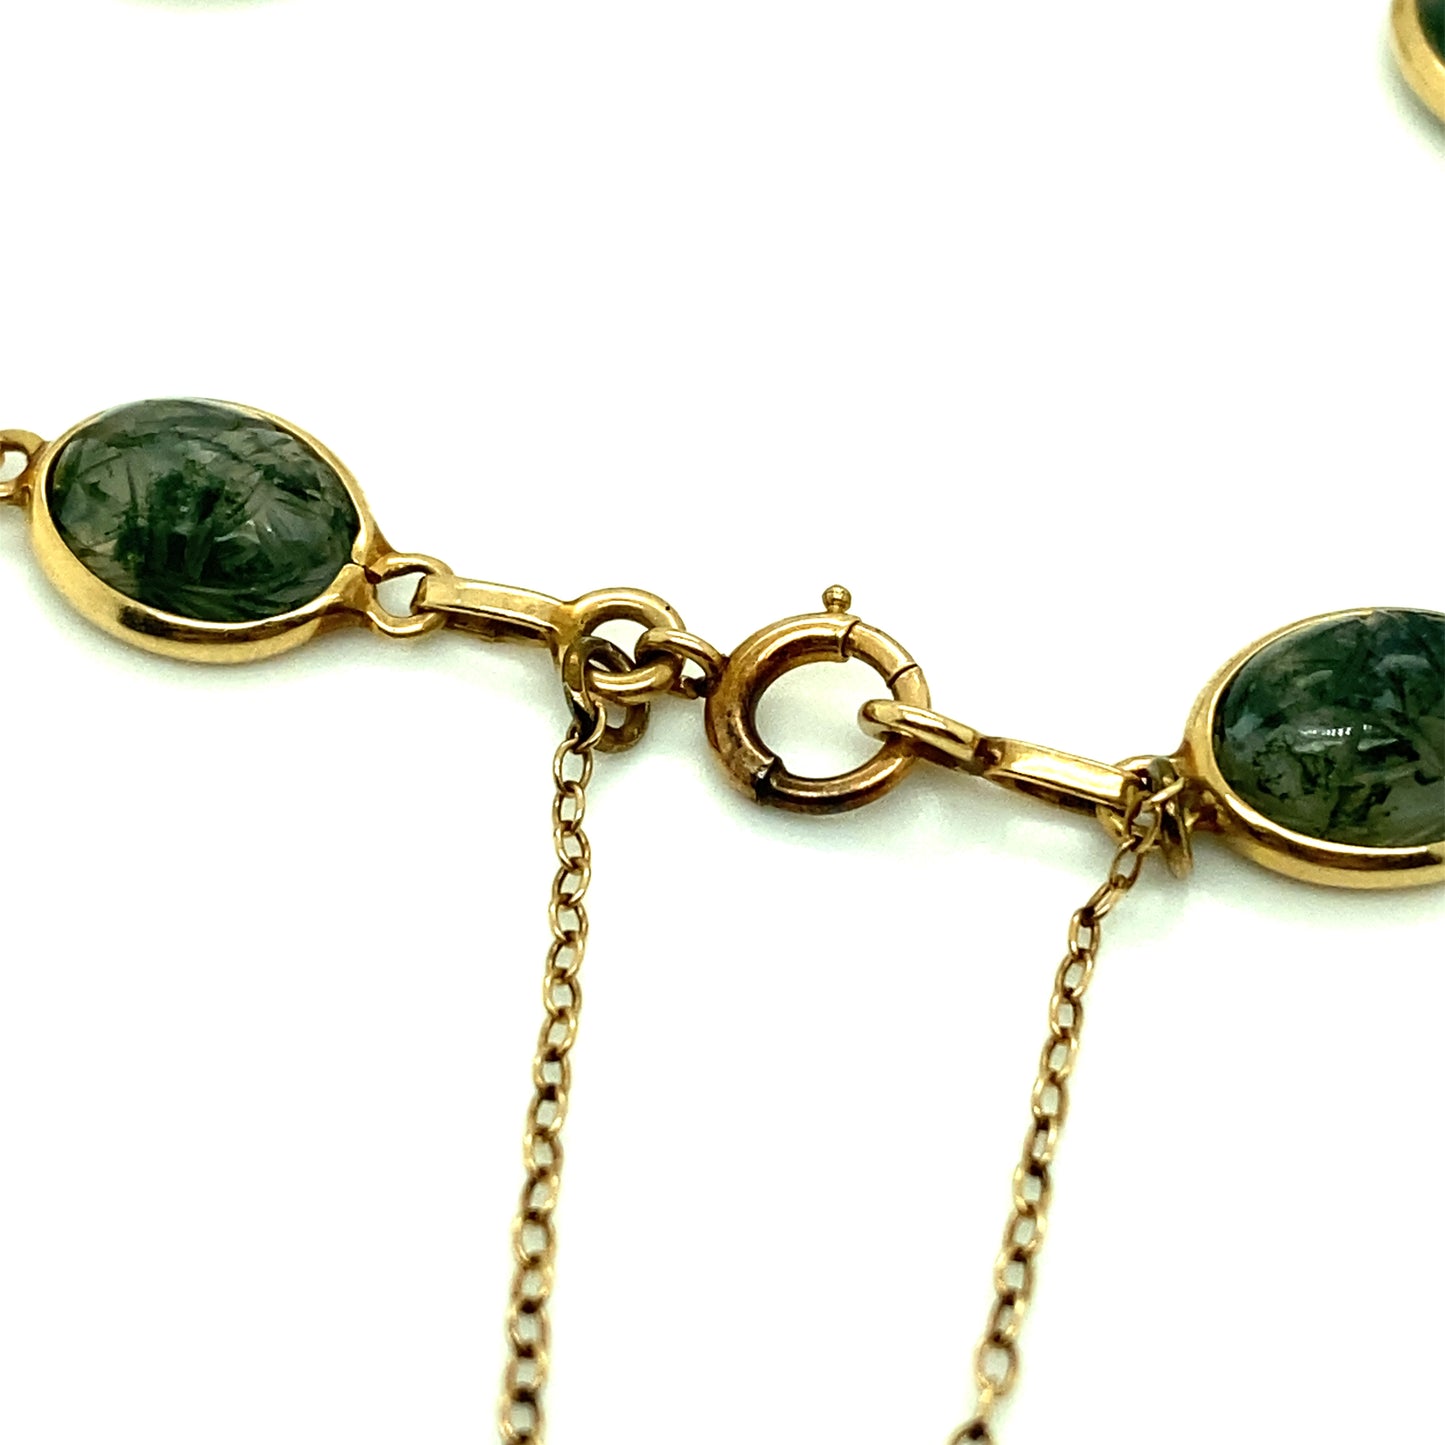 Circa 1960s Moss Agate Carved Scarab Link Bracelet in 14K Gold